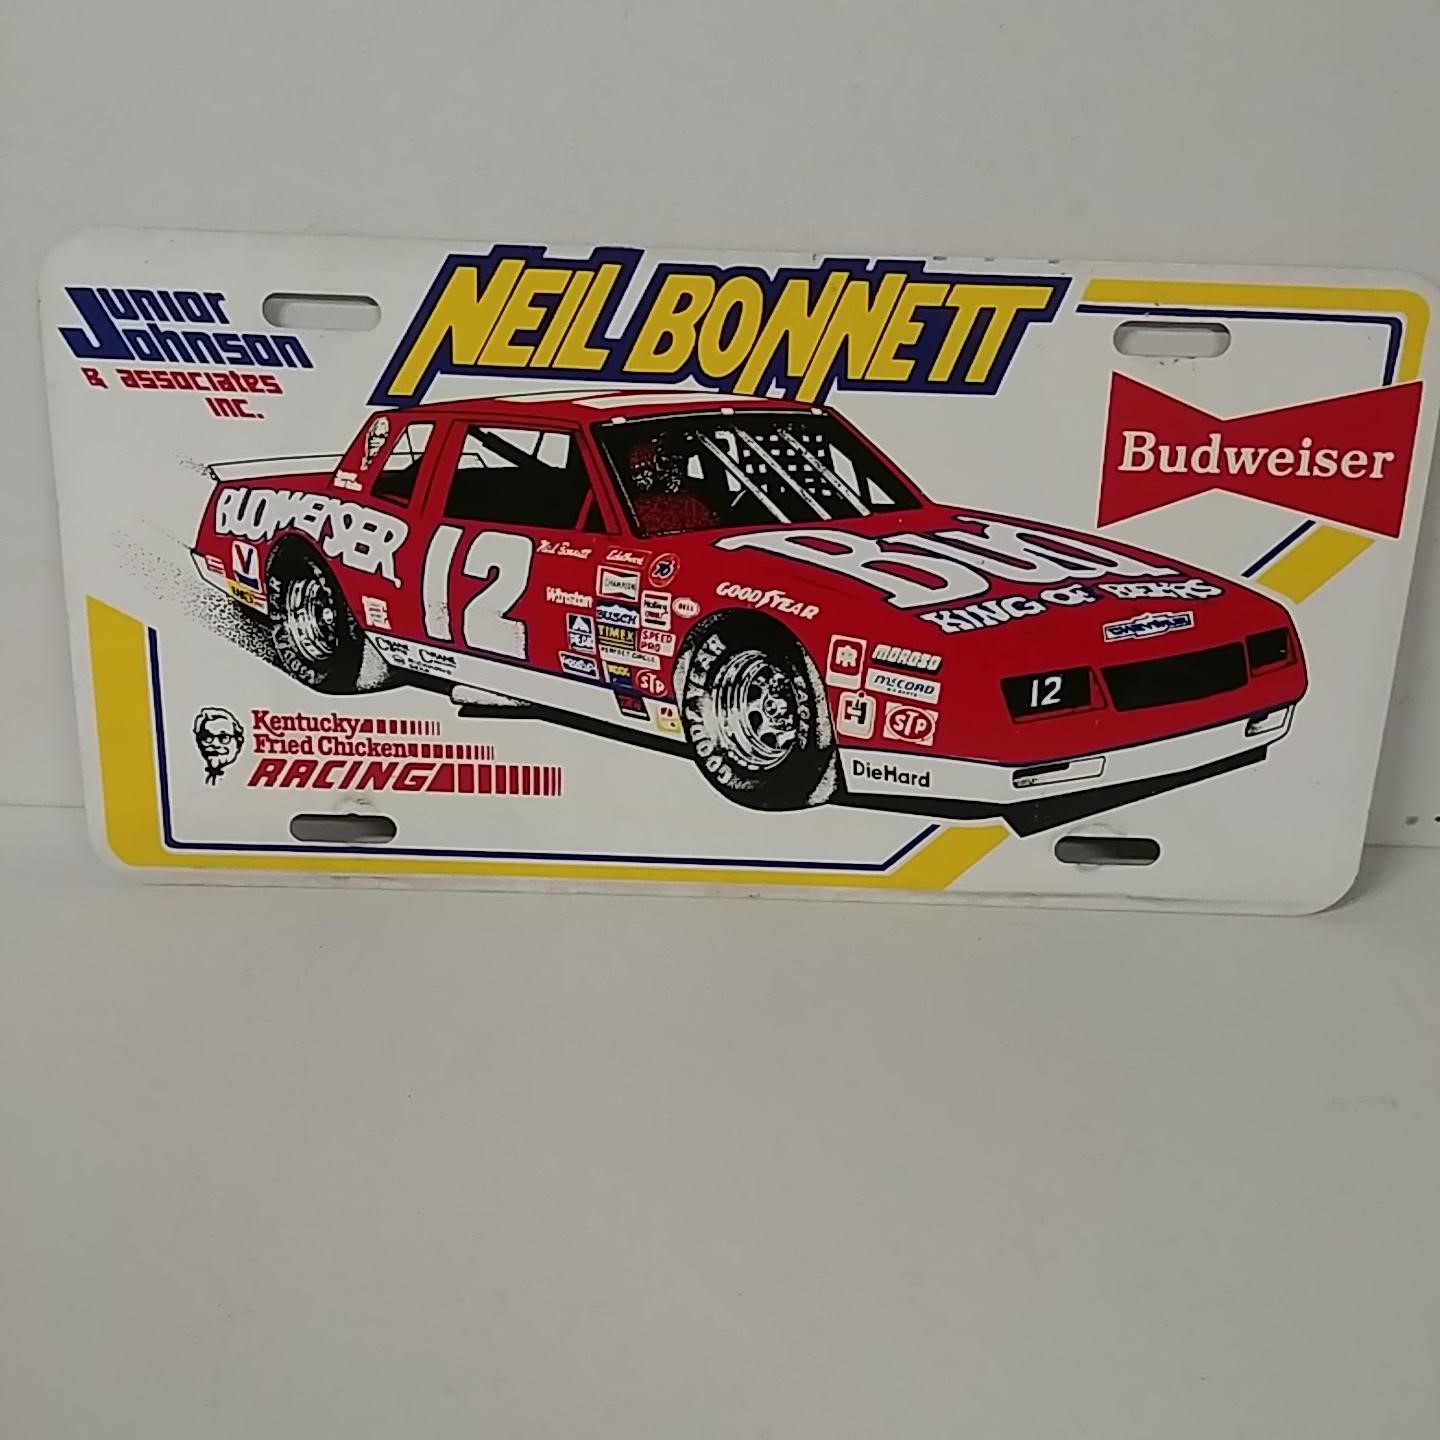 1985 Neil Bonnett Budweiser metal license plate